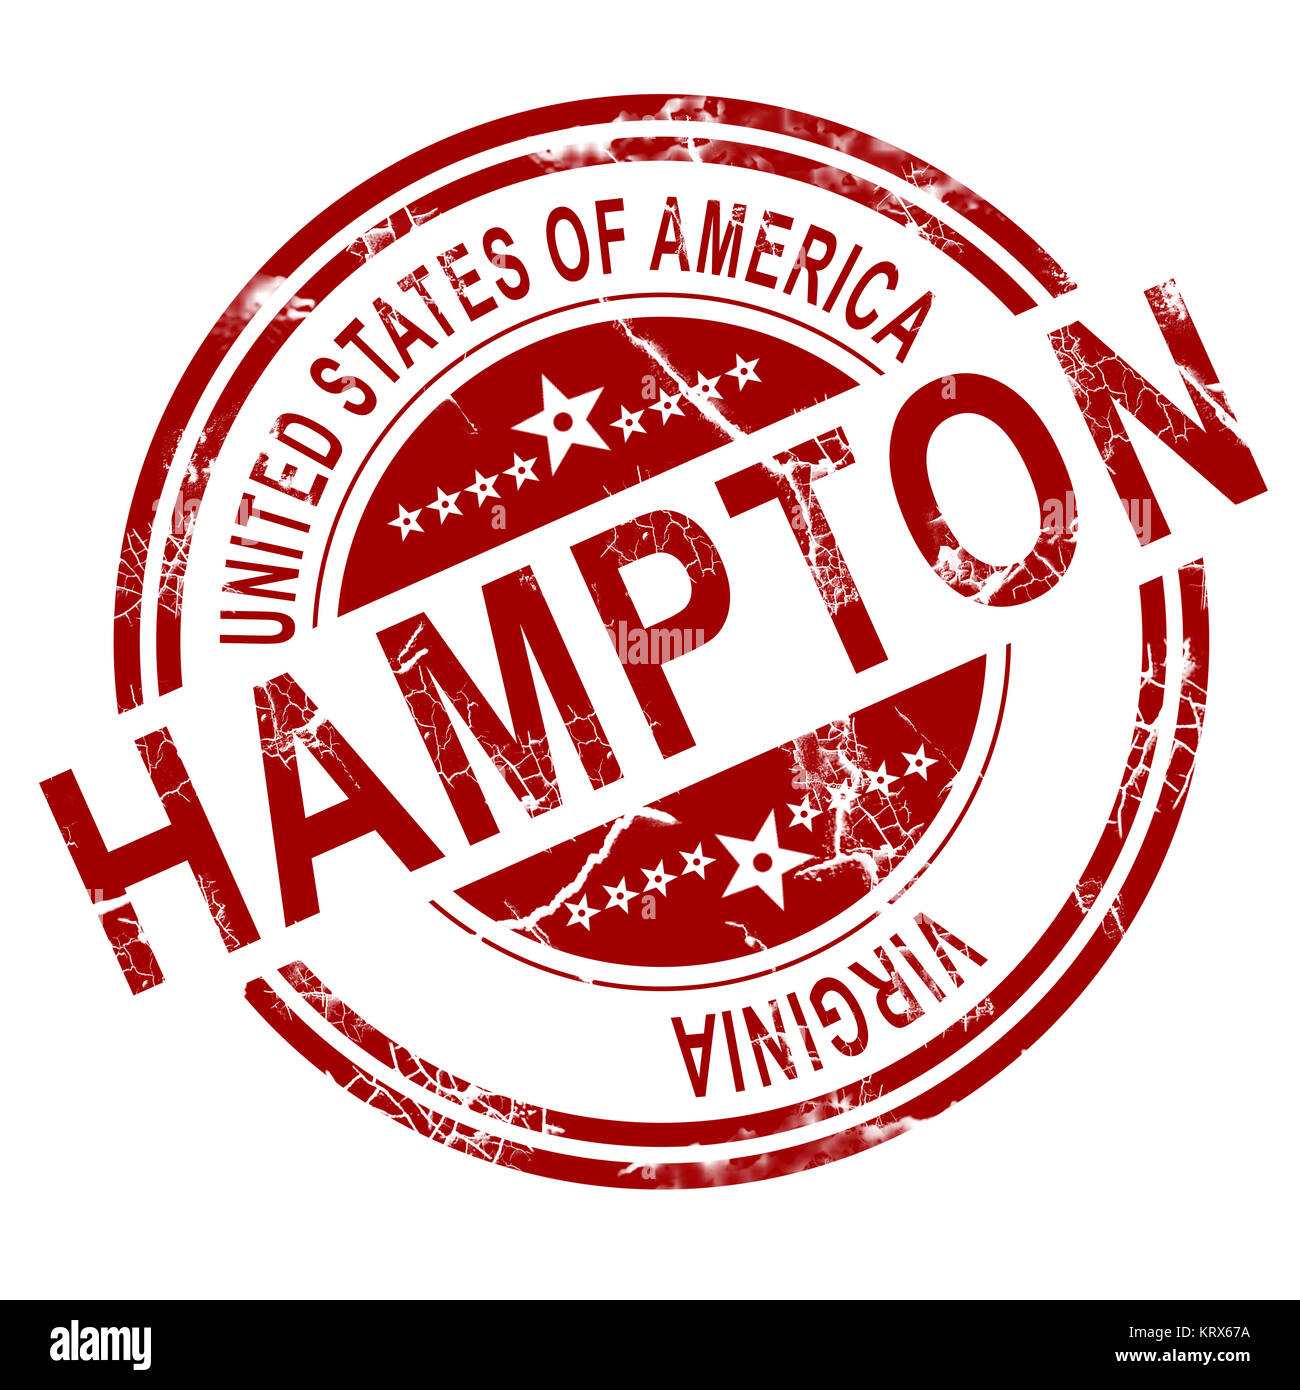 Hampton Virginia stamp with white background Stock Photo